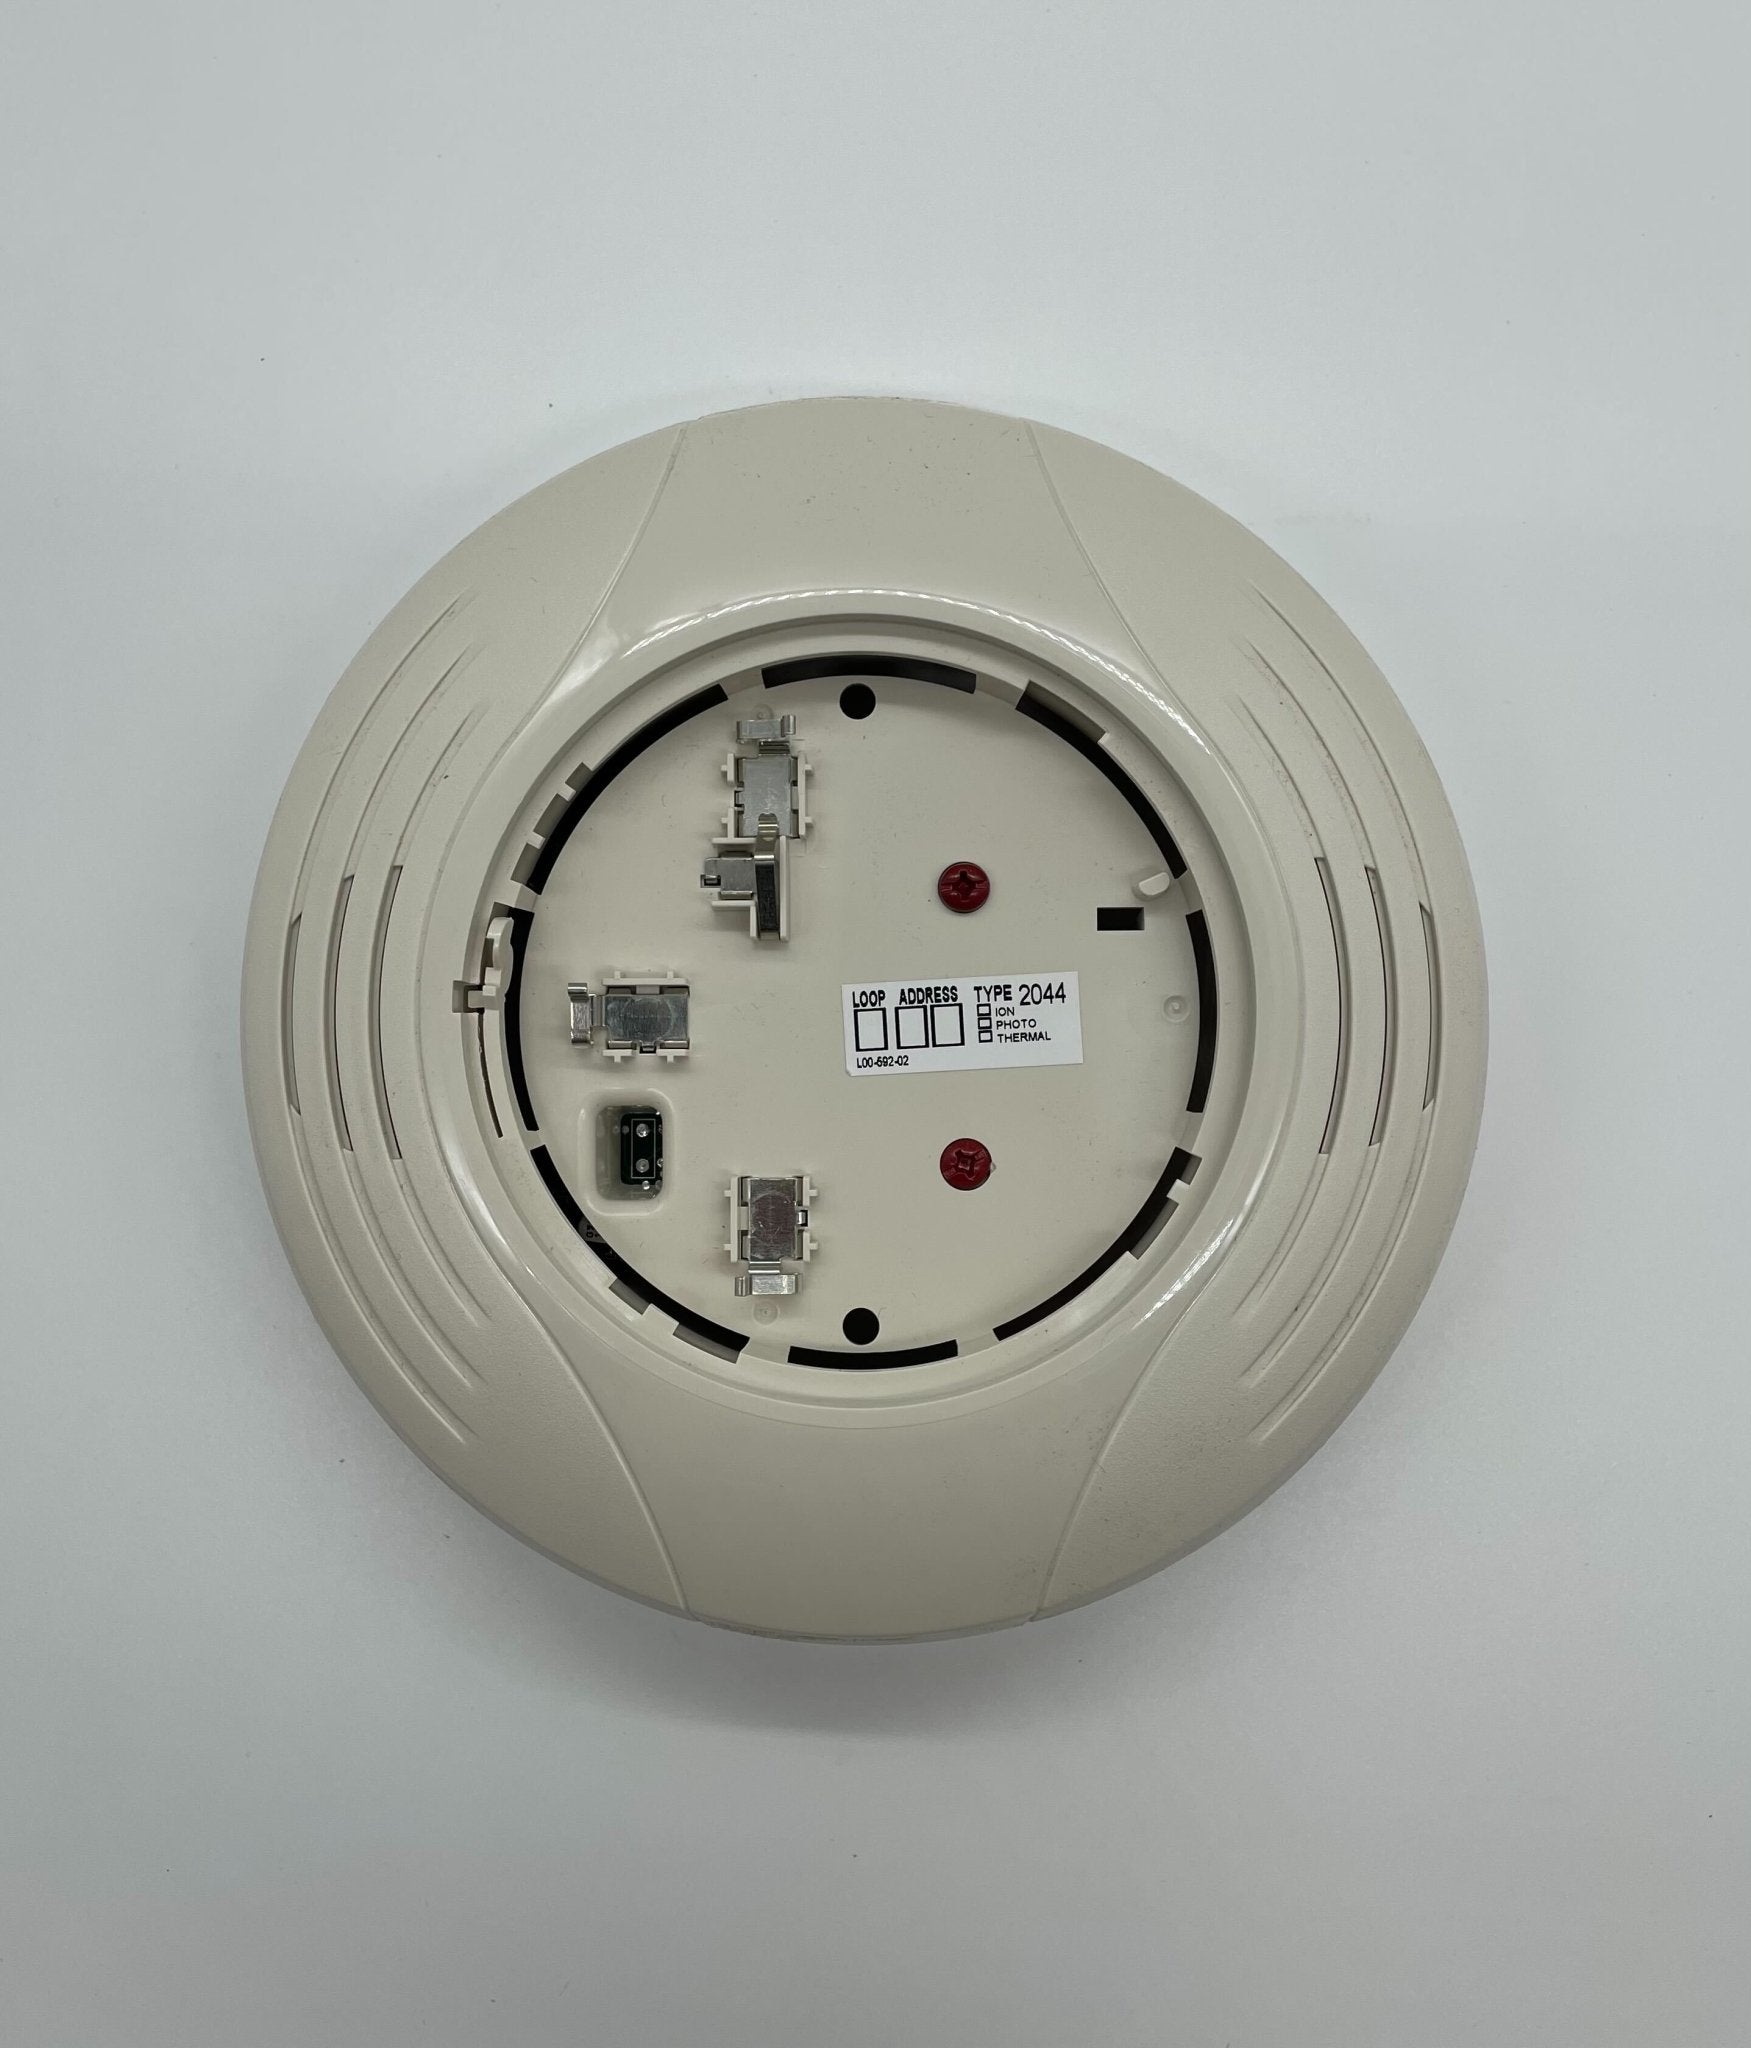 System Sensor APB200 - The Fire Alarm Supplier